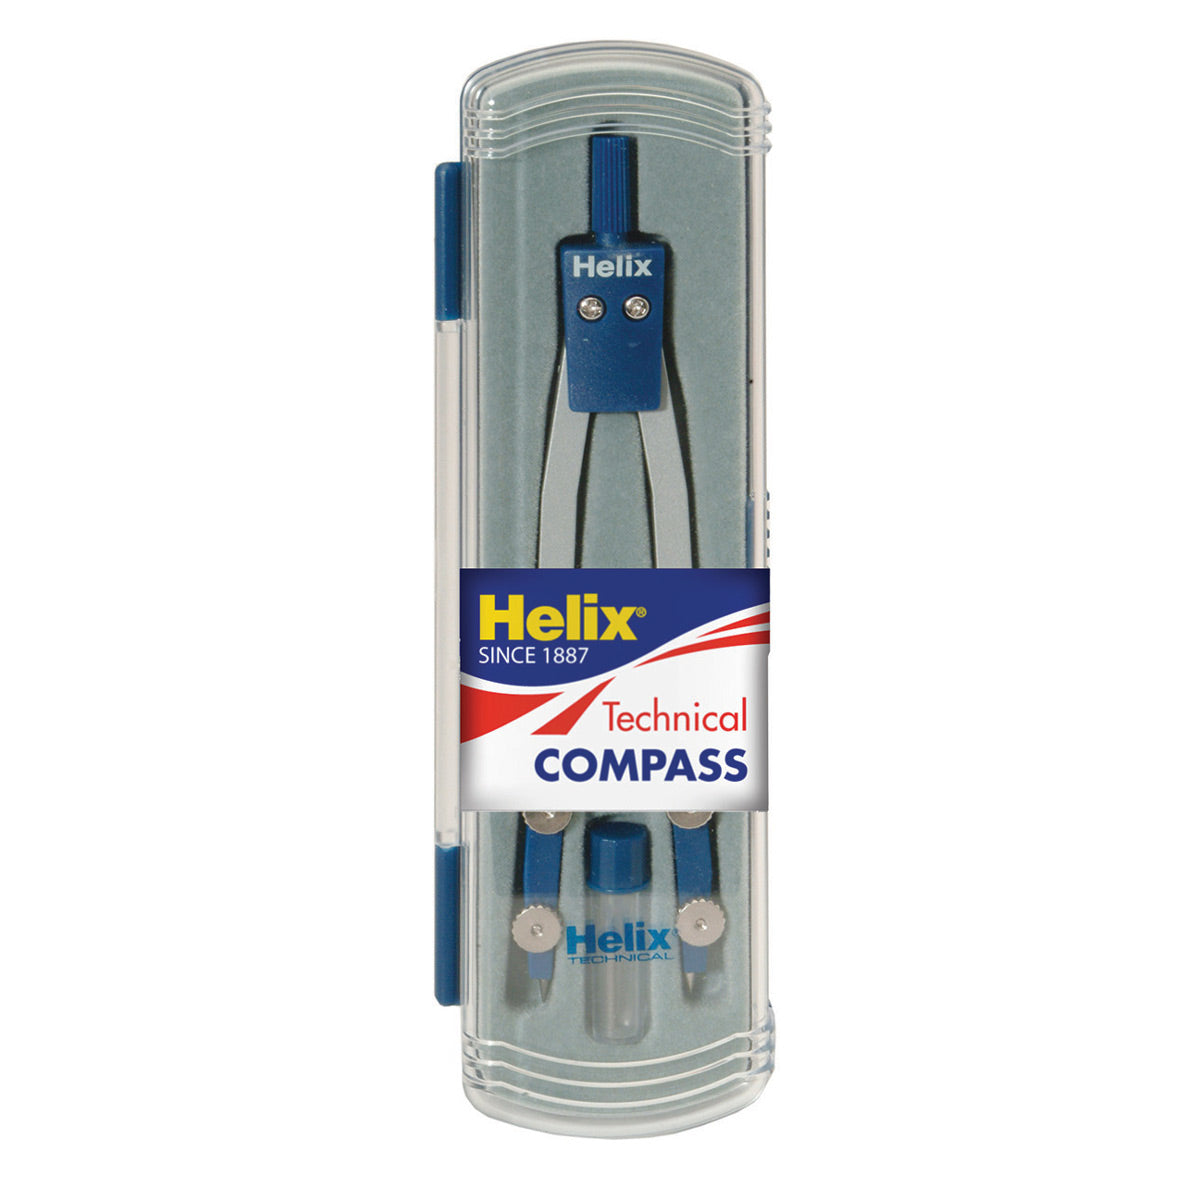 Helix 130mm Technical Compass